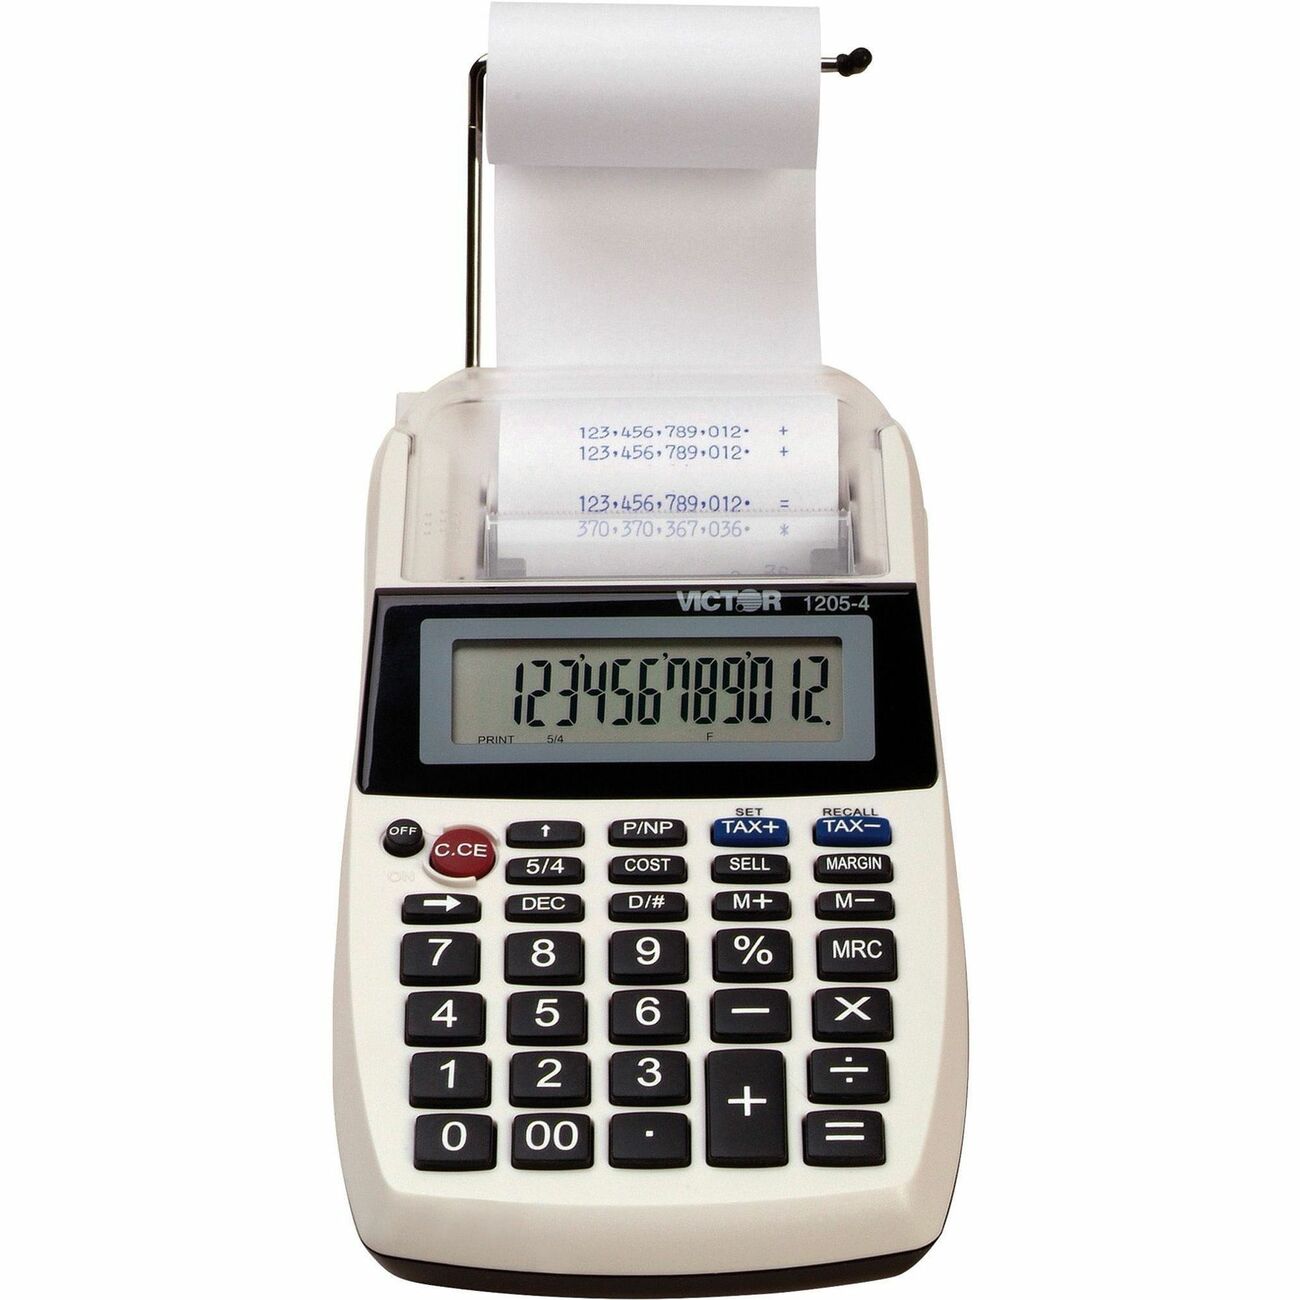 Victor 1205-4 12 Digit Desktop Printing Calculator